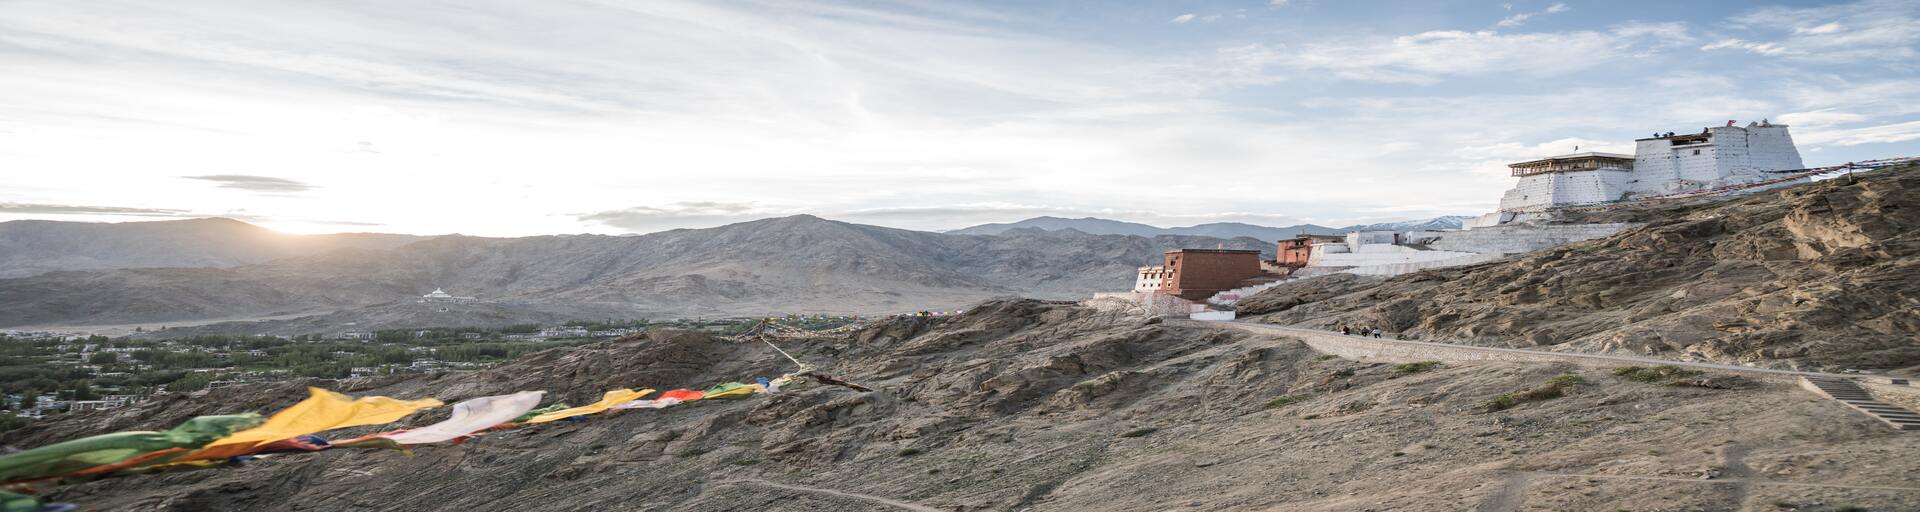 Ladakh_Tour_Header_Image